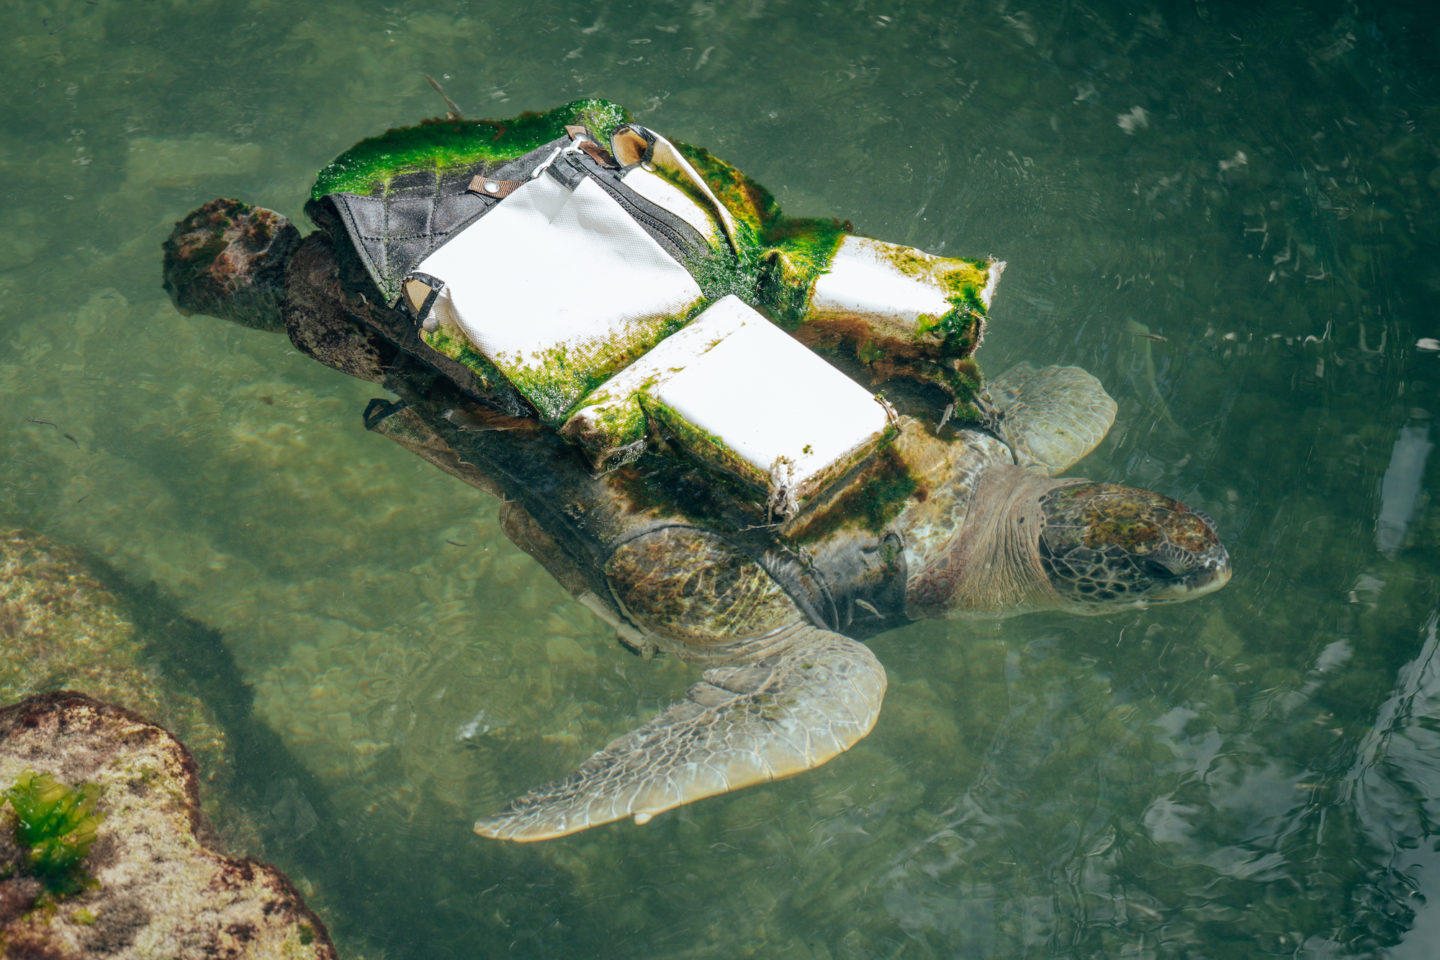 Turtle with life vest - Theater of The Sea, Islamorada